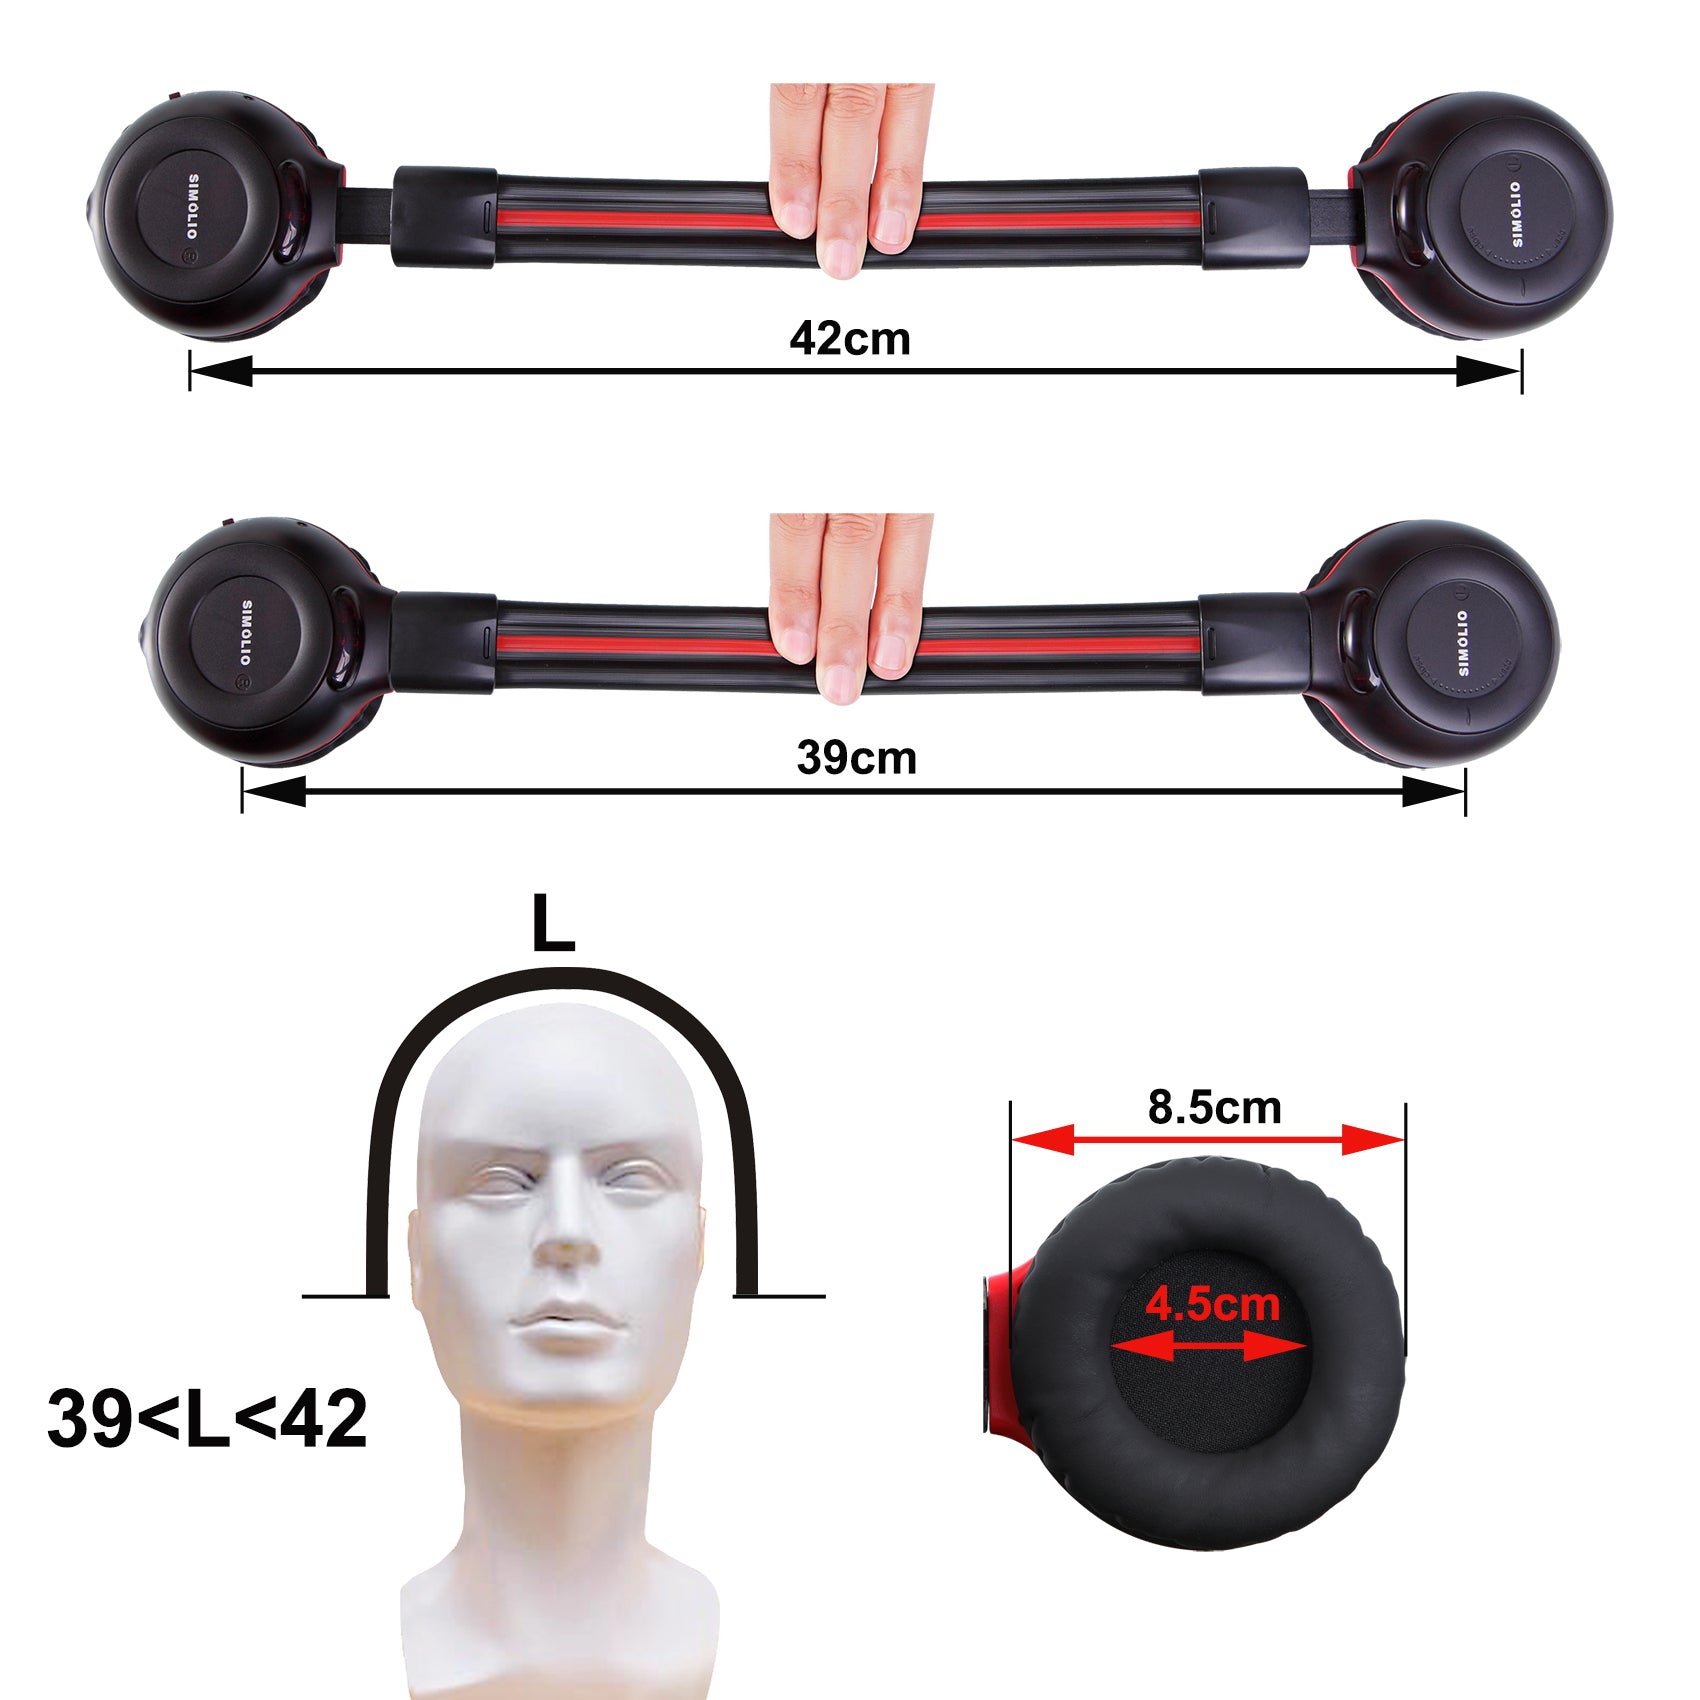 SIMOLIO SM-561B4 wireless car headphones with dual channels adjustable